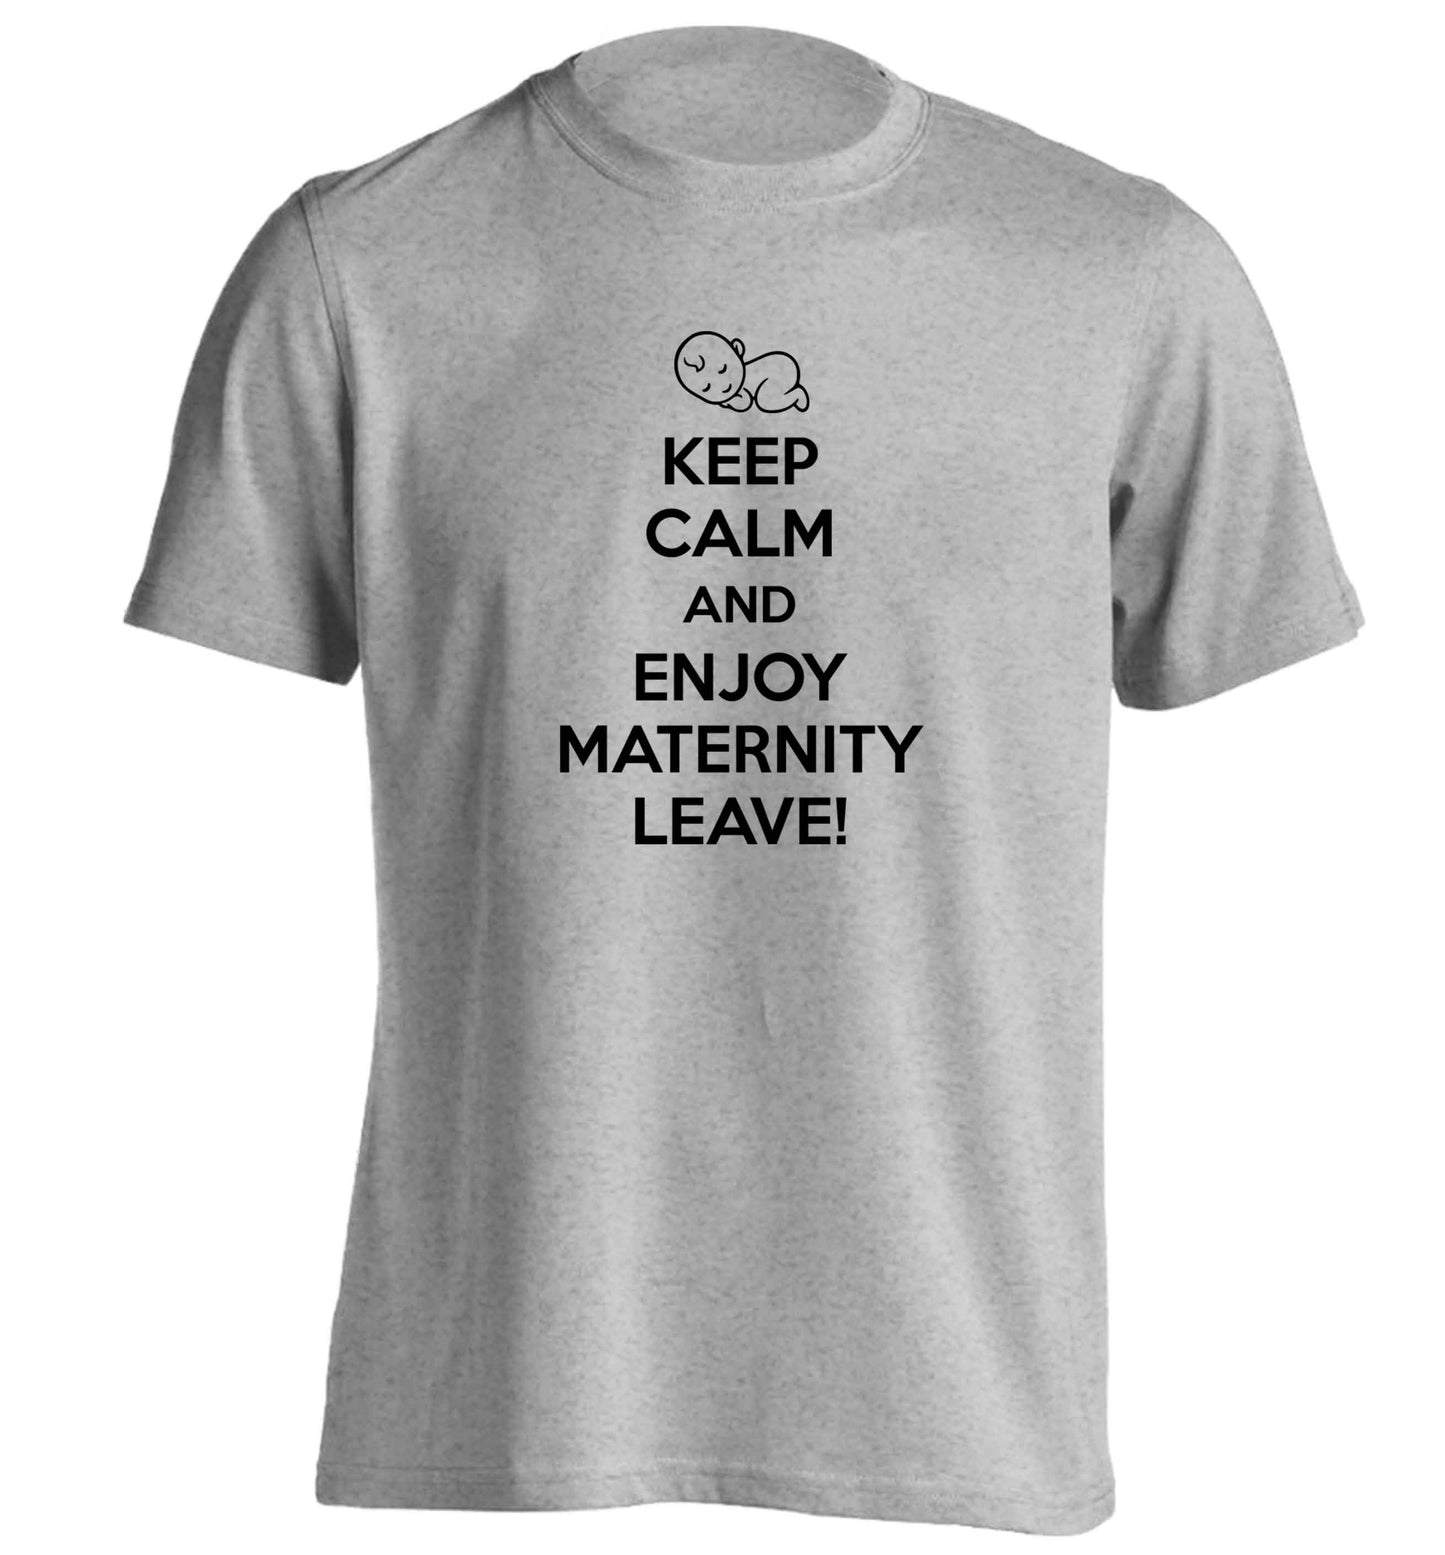 Keep calm and enjoy maternity leave adults unisex grey Tshirt 2XL